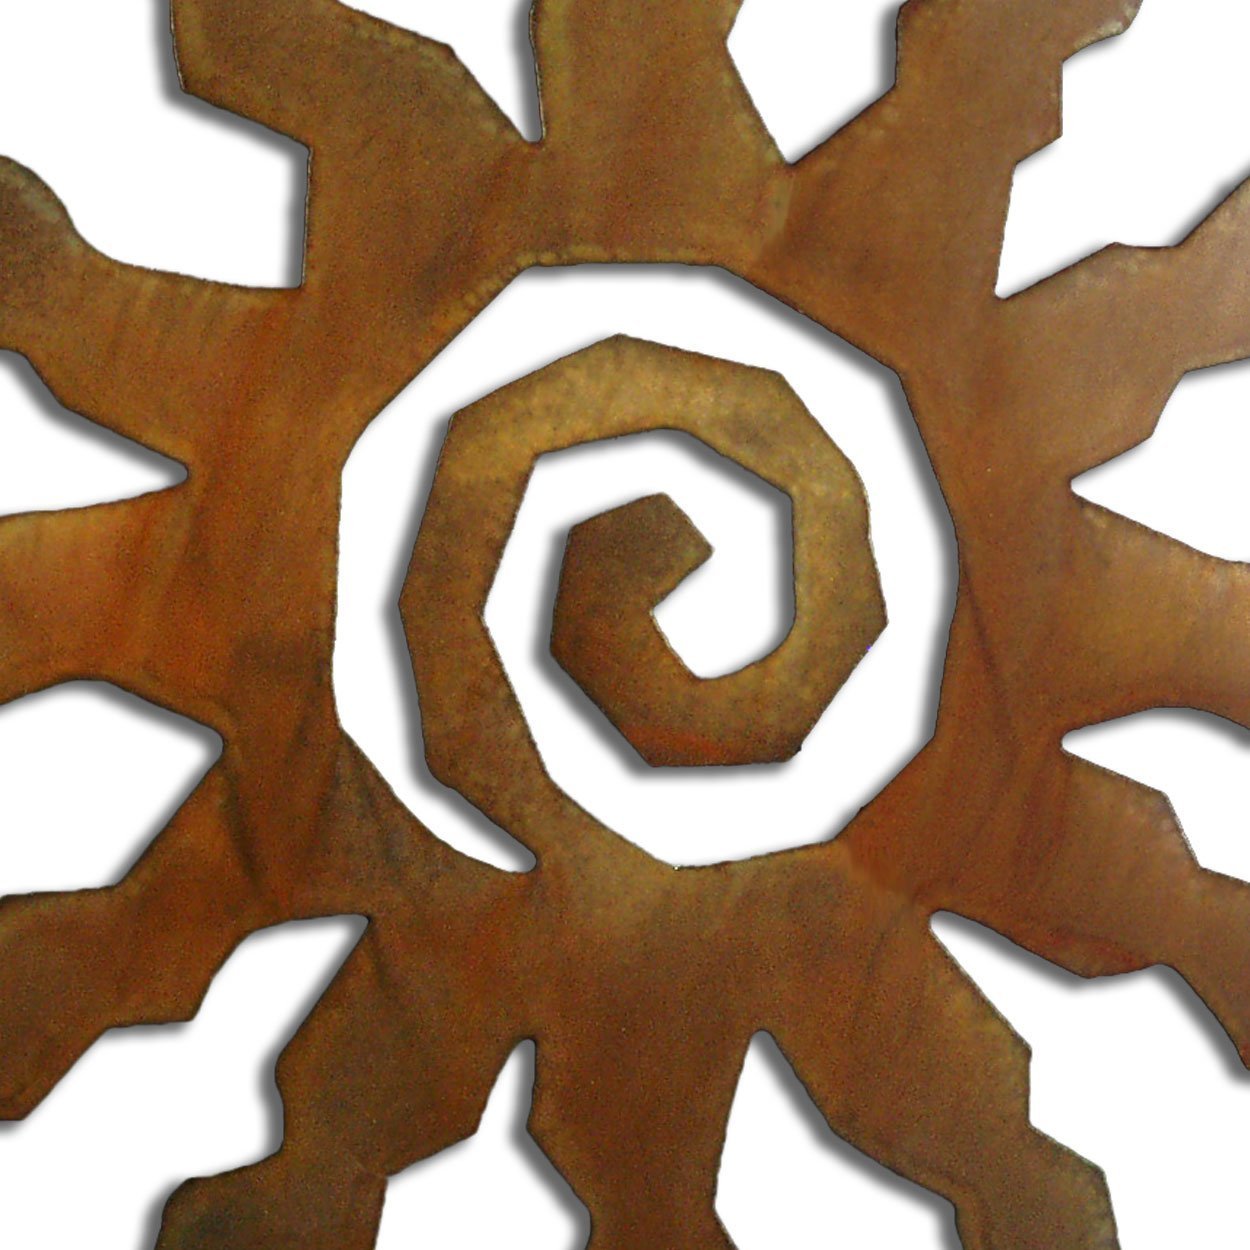 165151 - 12-inch small 12-Point Spiral Sunburst 3D Metal Wall Art in a rich rust finish